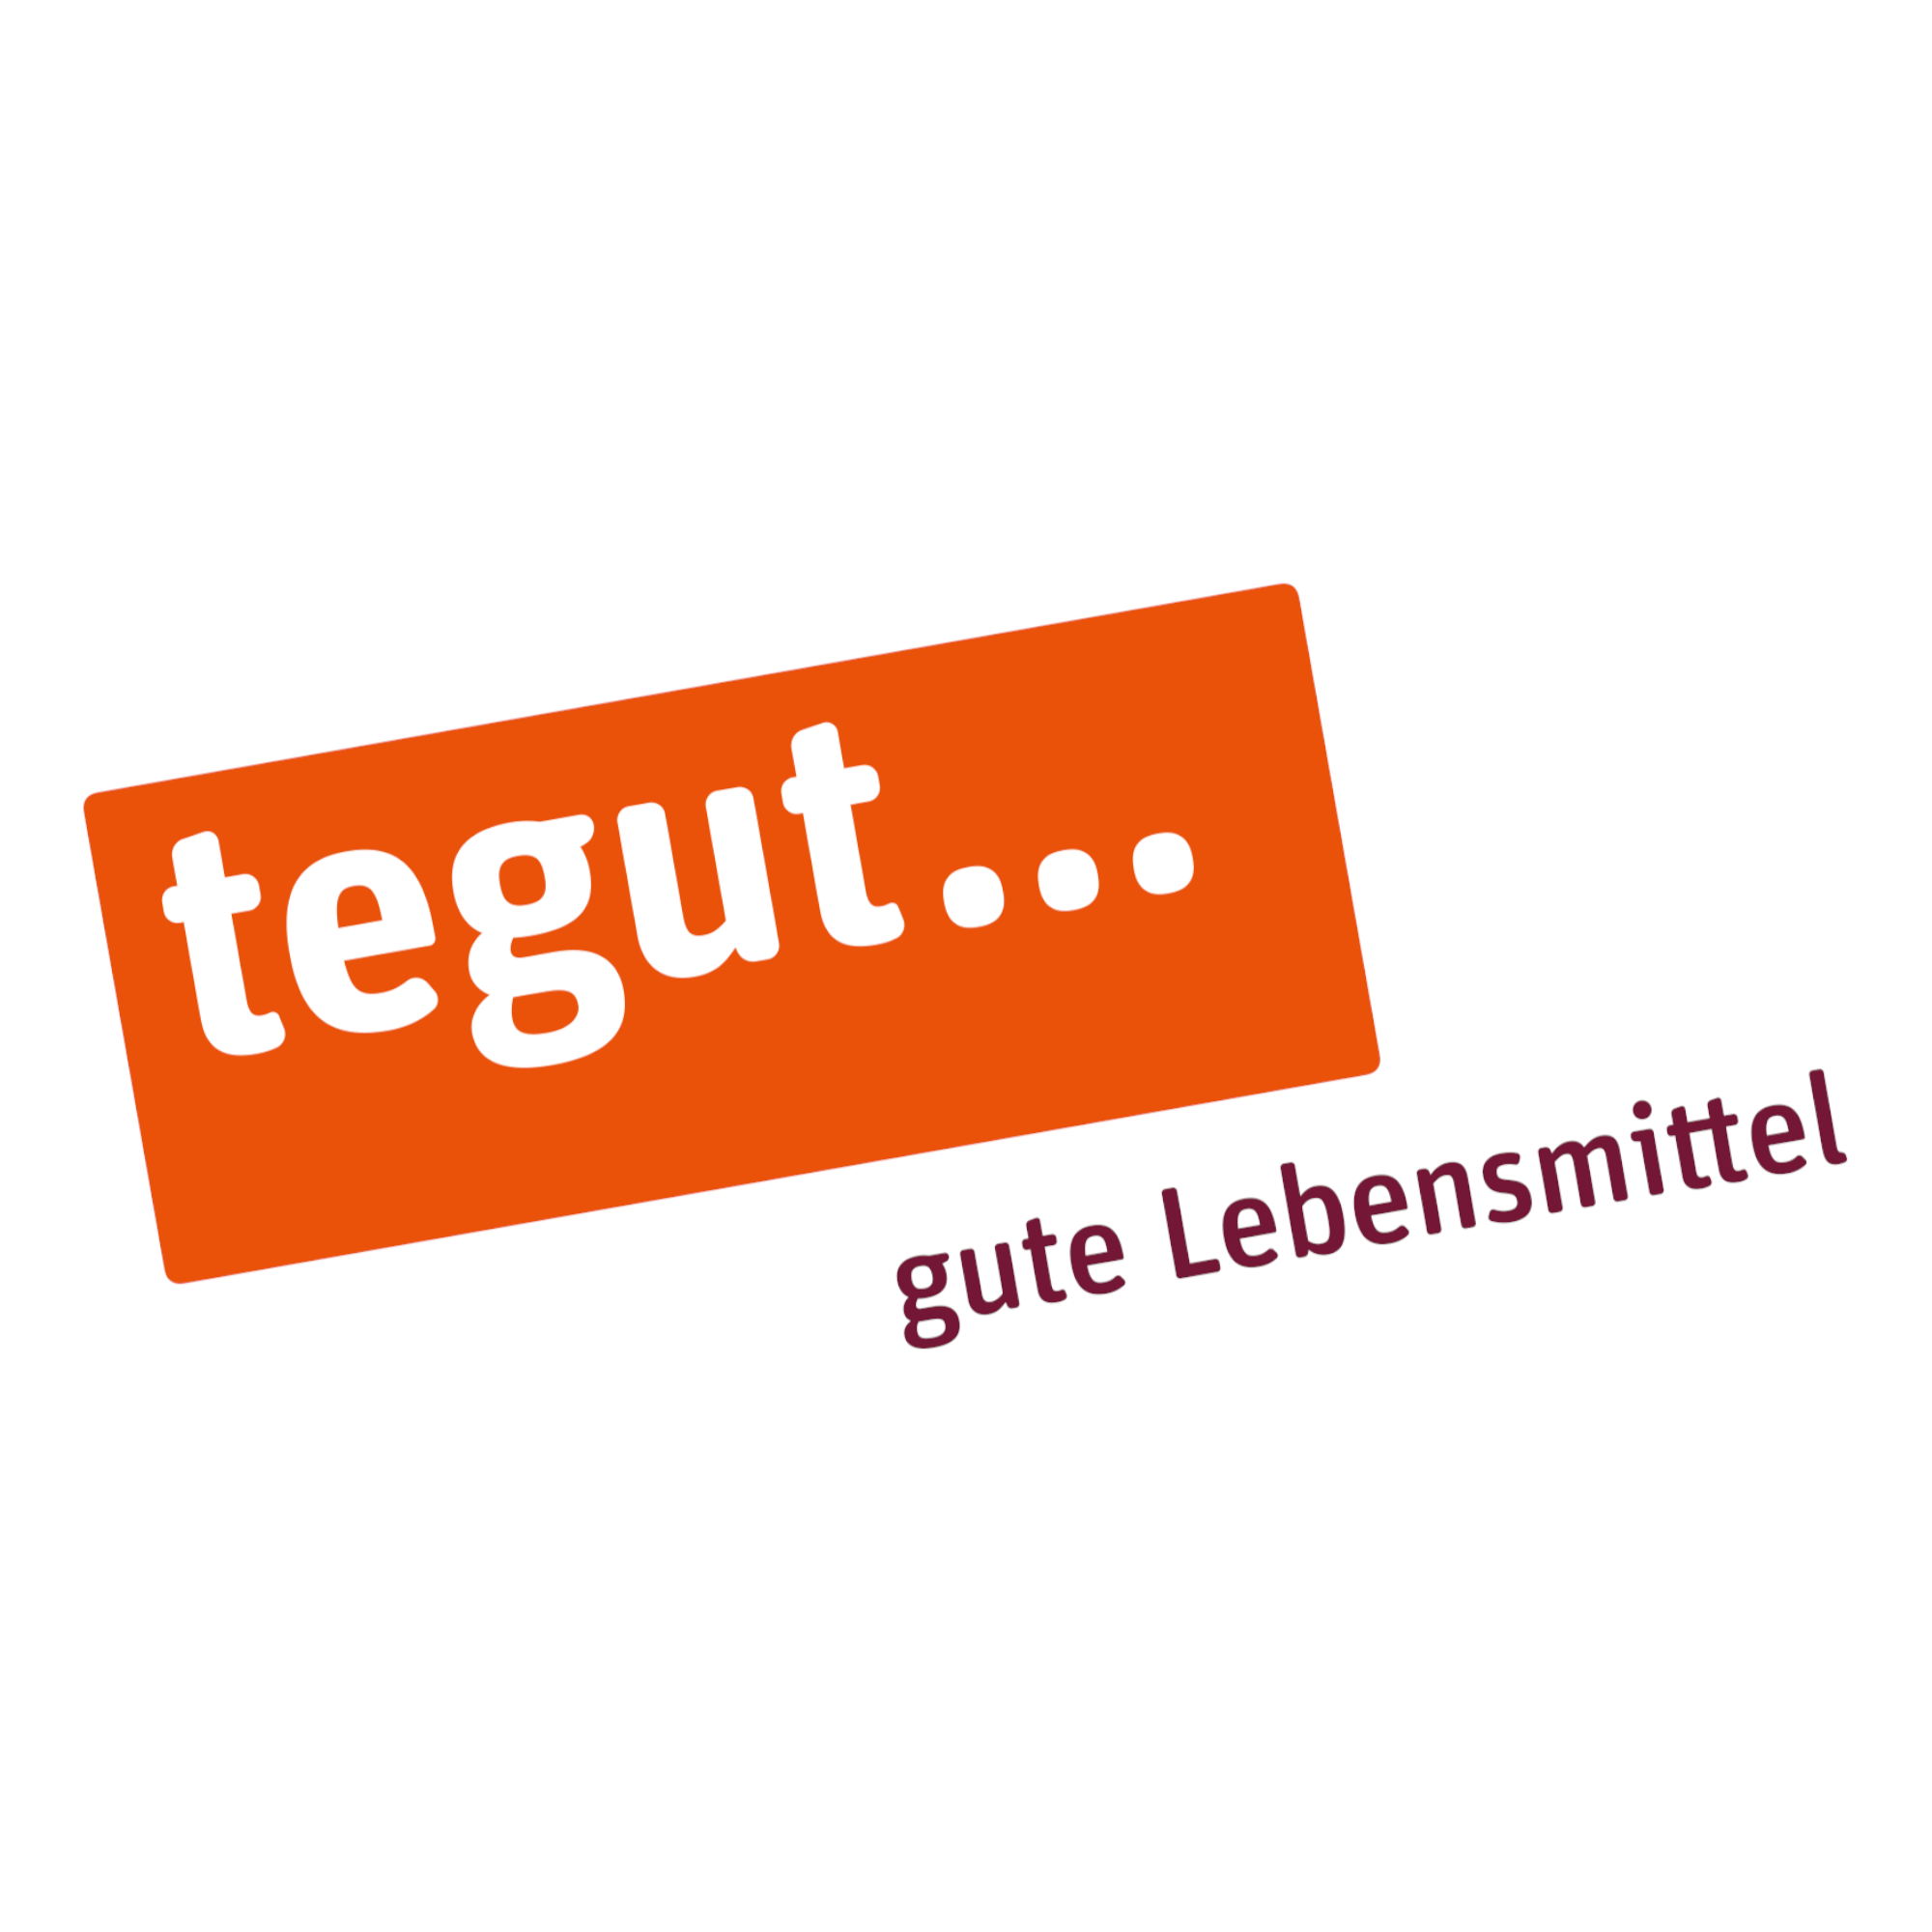 tegut... gute Lebensmittel in Bruchköbel - Logo